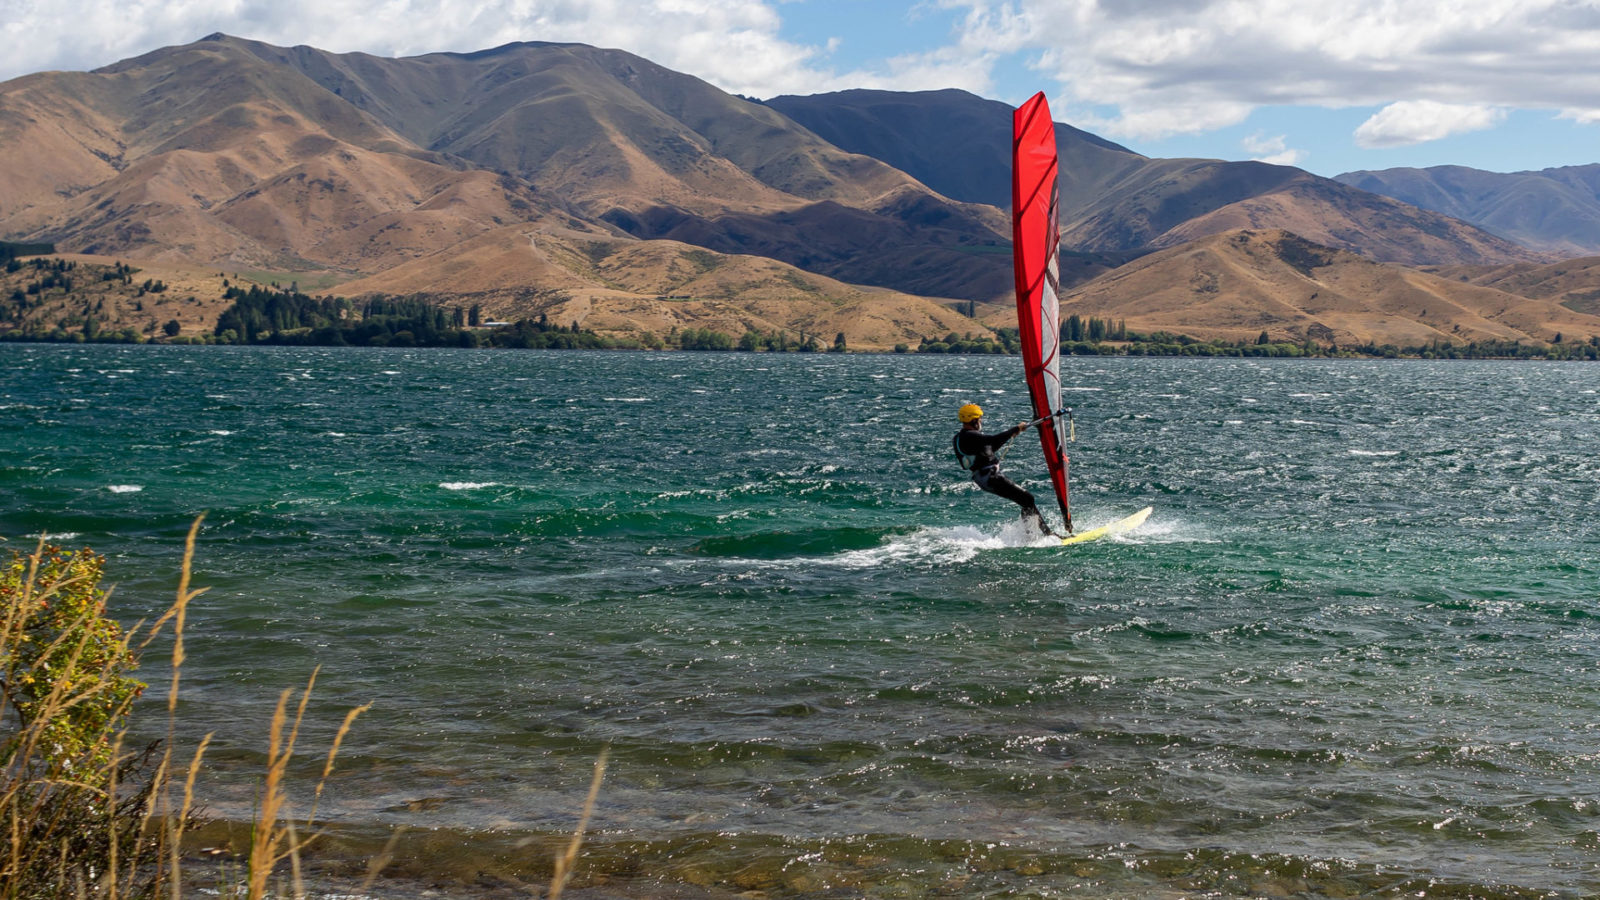 Windsurfing on Lake Aviemore, New Zealand